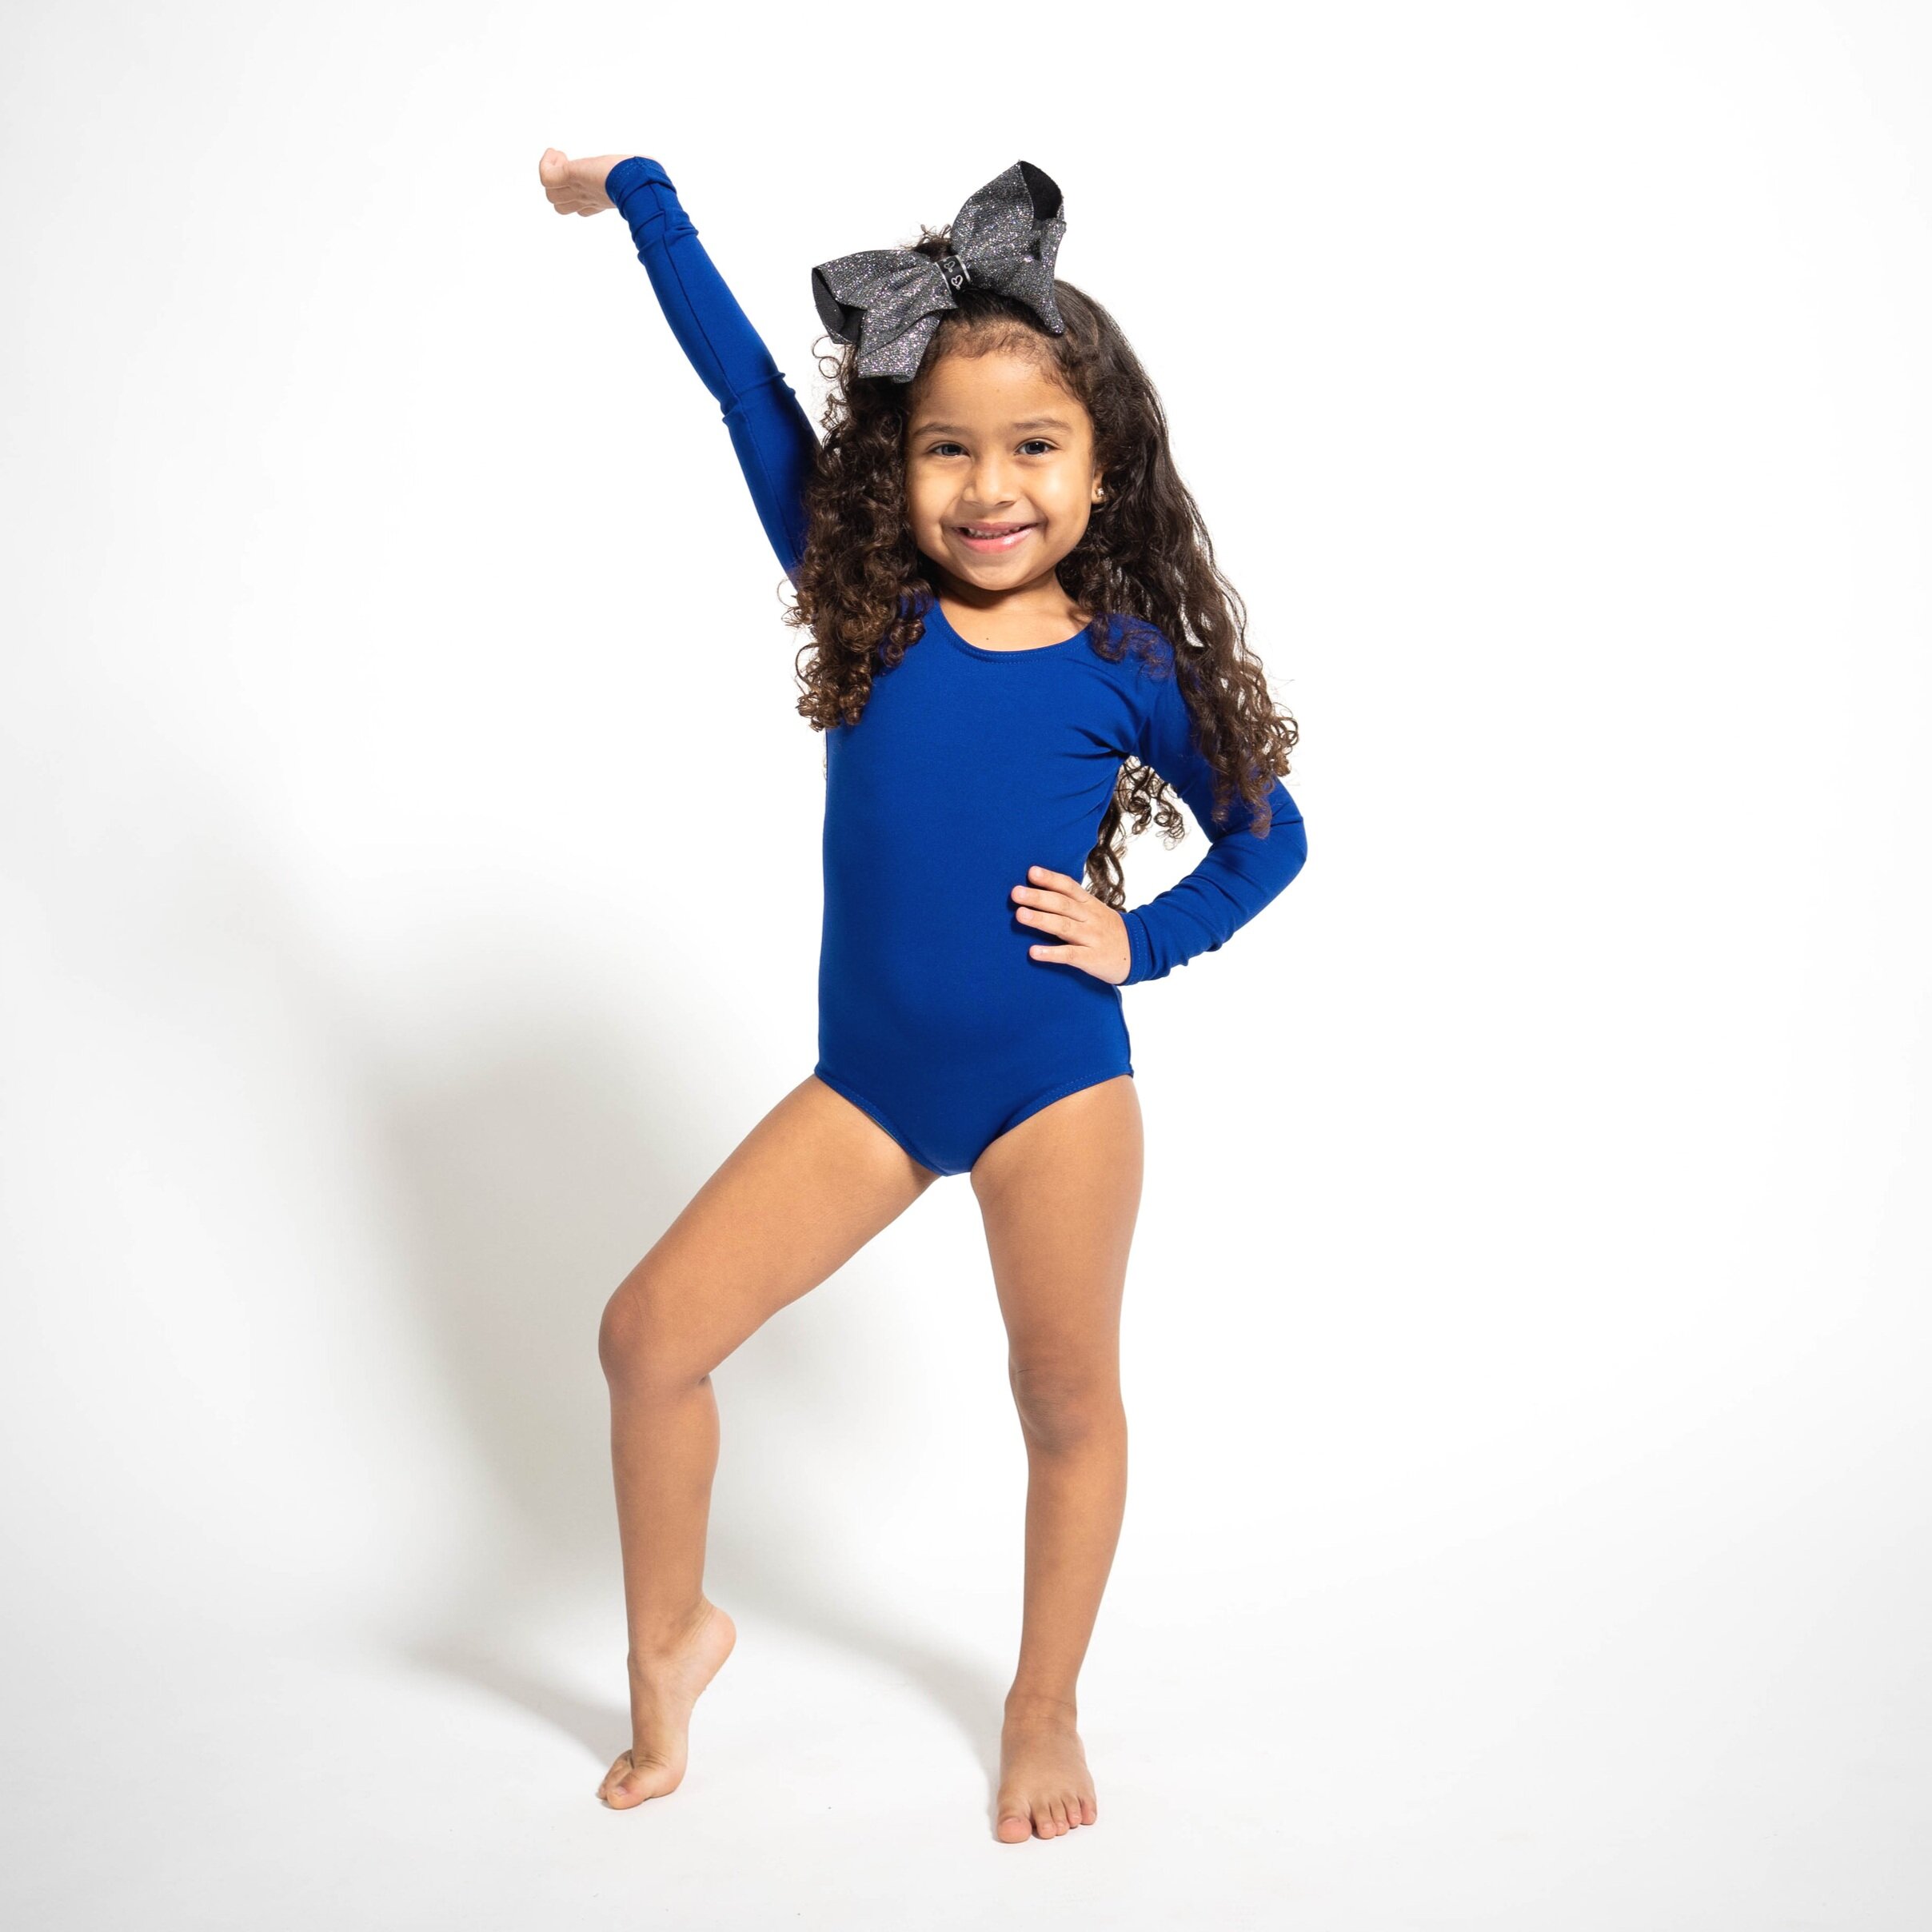 Photo of little girl wearing blue leotard posing. (Copy) (Copy) (Copy) (Copy) (Copy) (Copy) (Copy) (Copy)